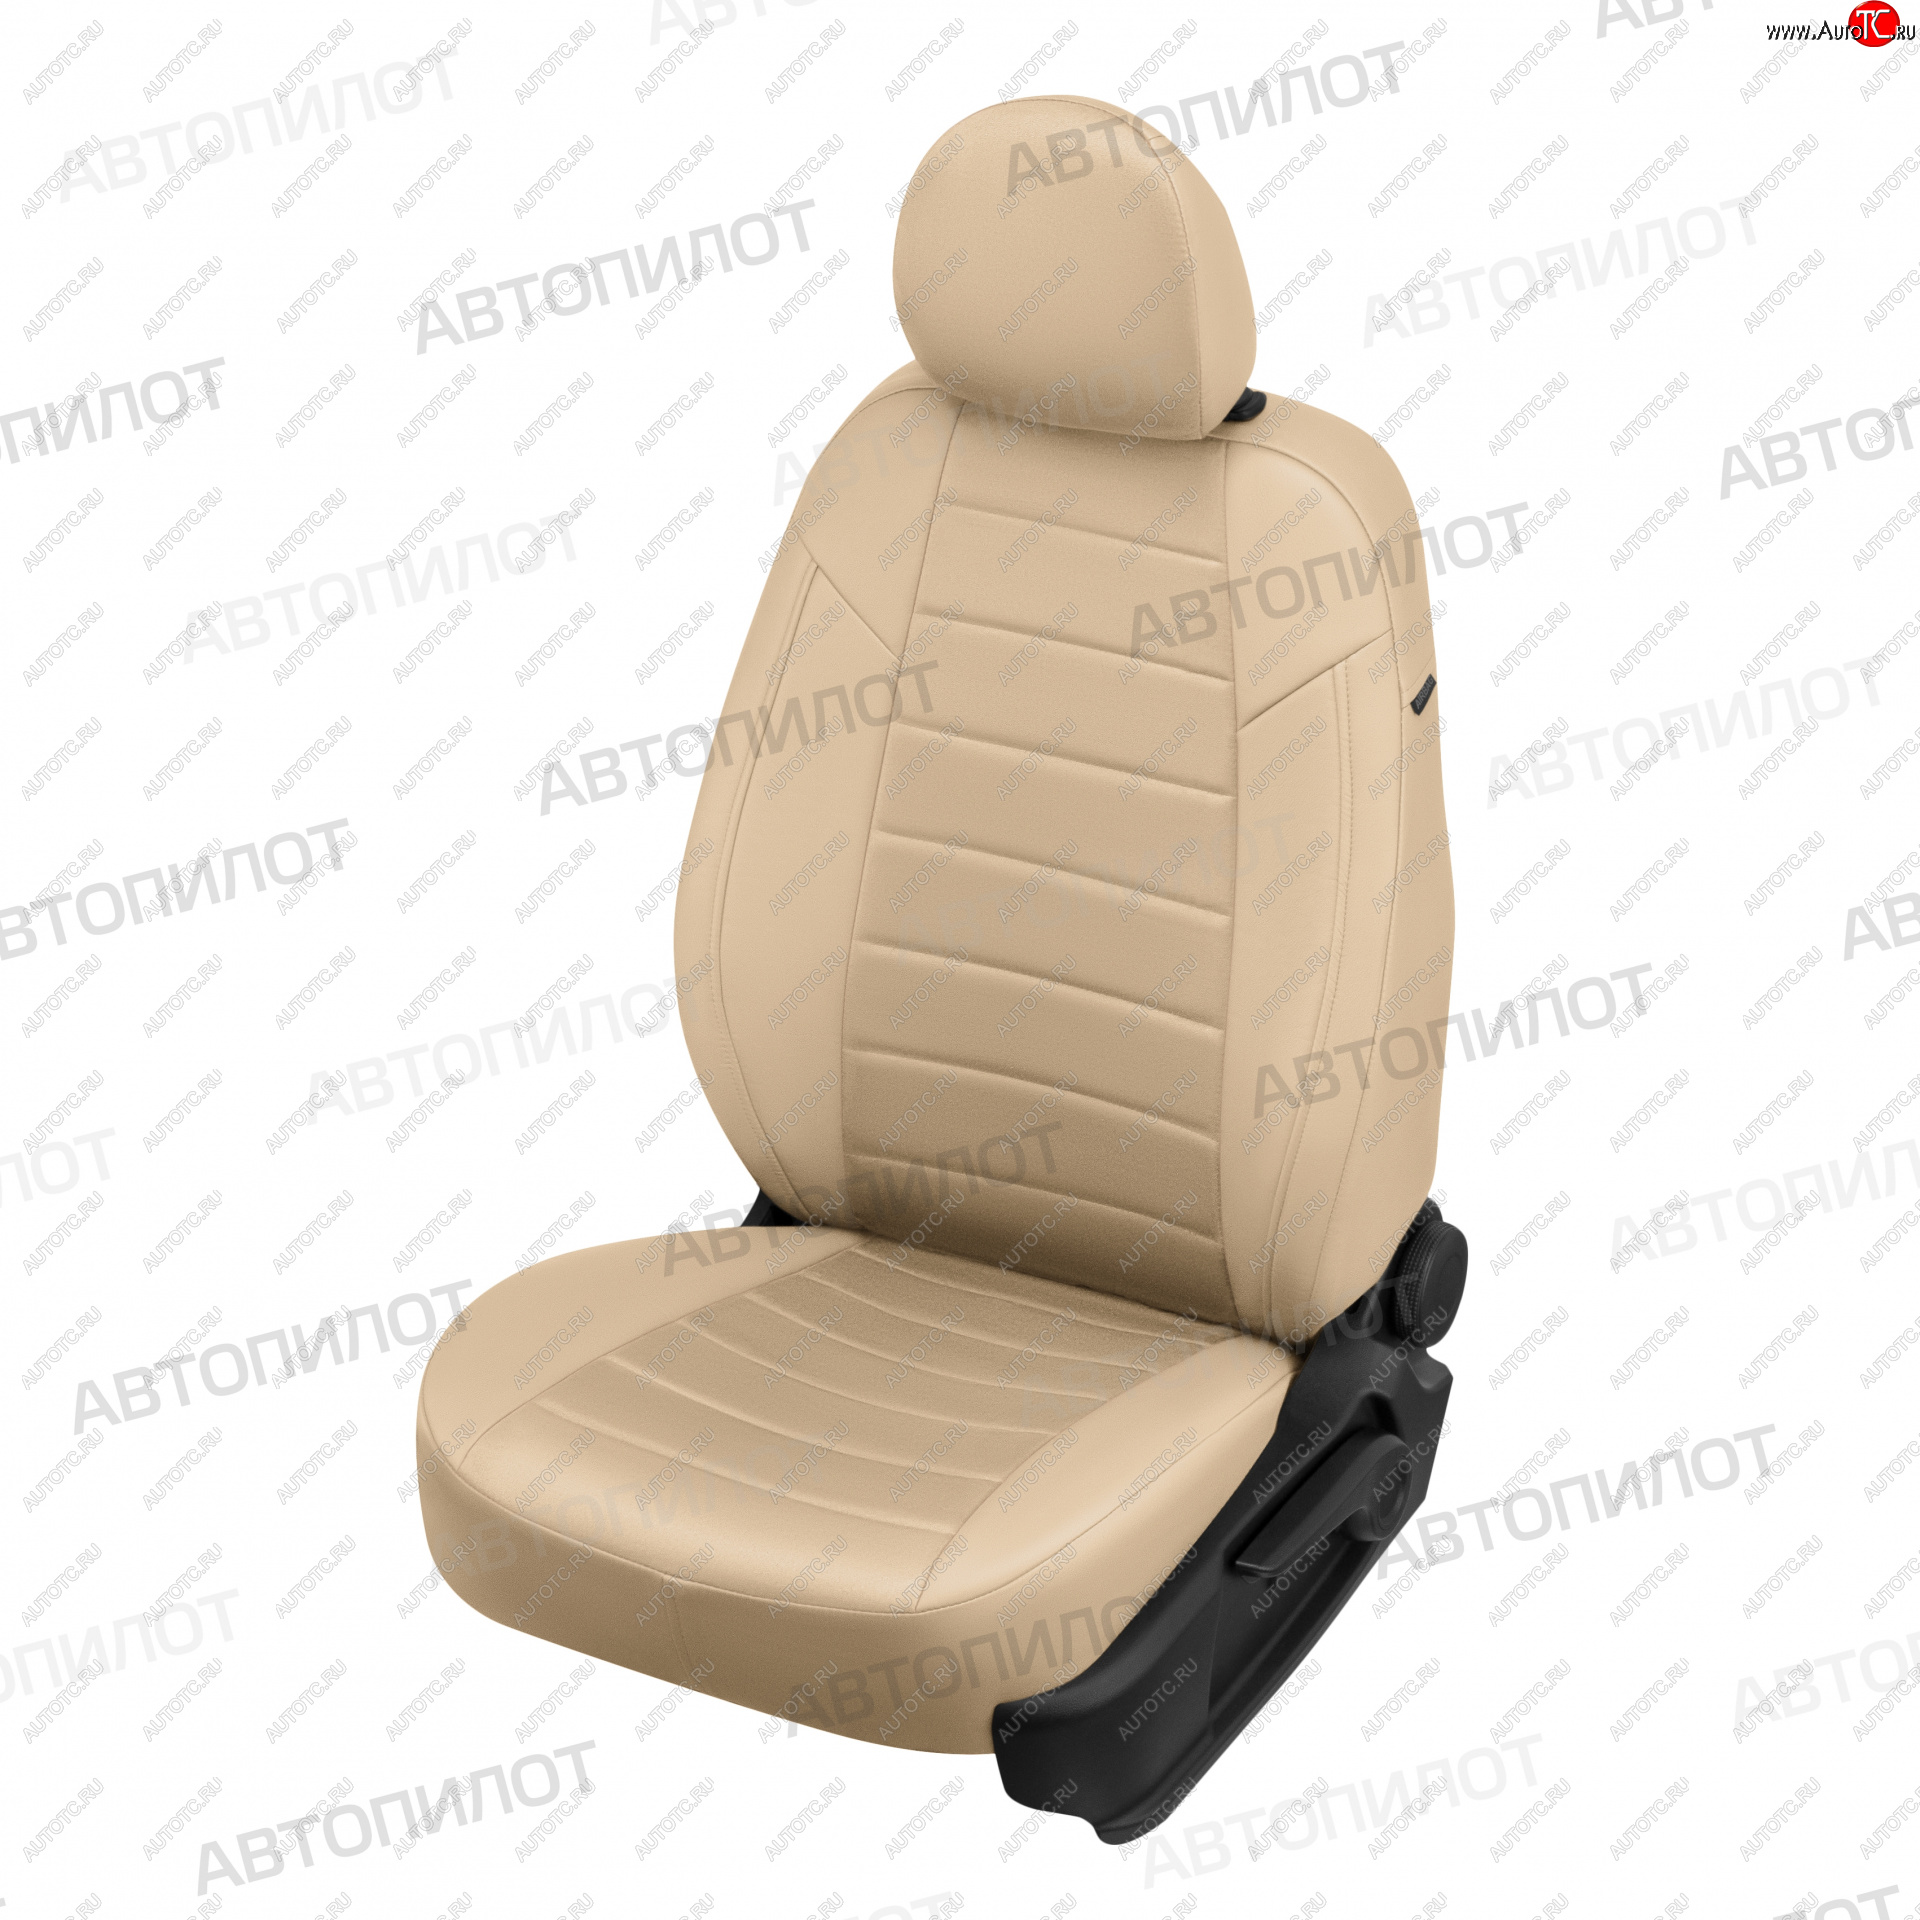 13 449 р. Чехлы сидений (экокожа/бежевый) Автопилот  KIA Cerato  1 LD (2003-2008) (бежевый)